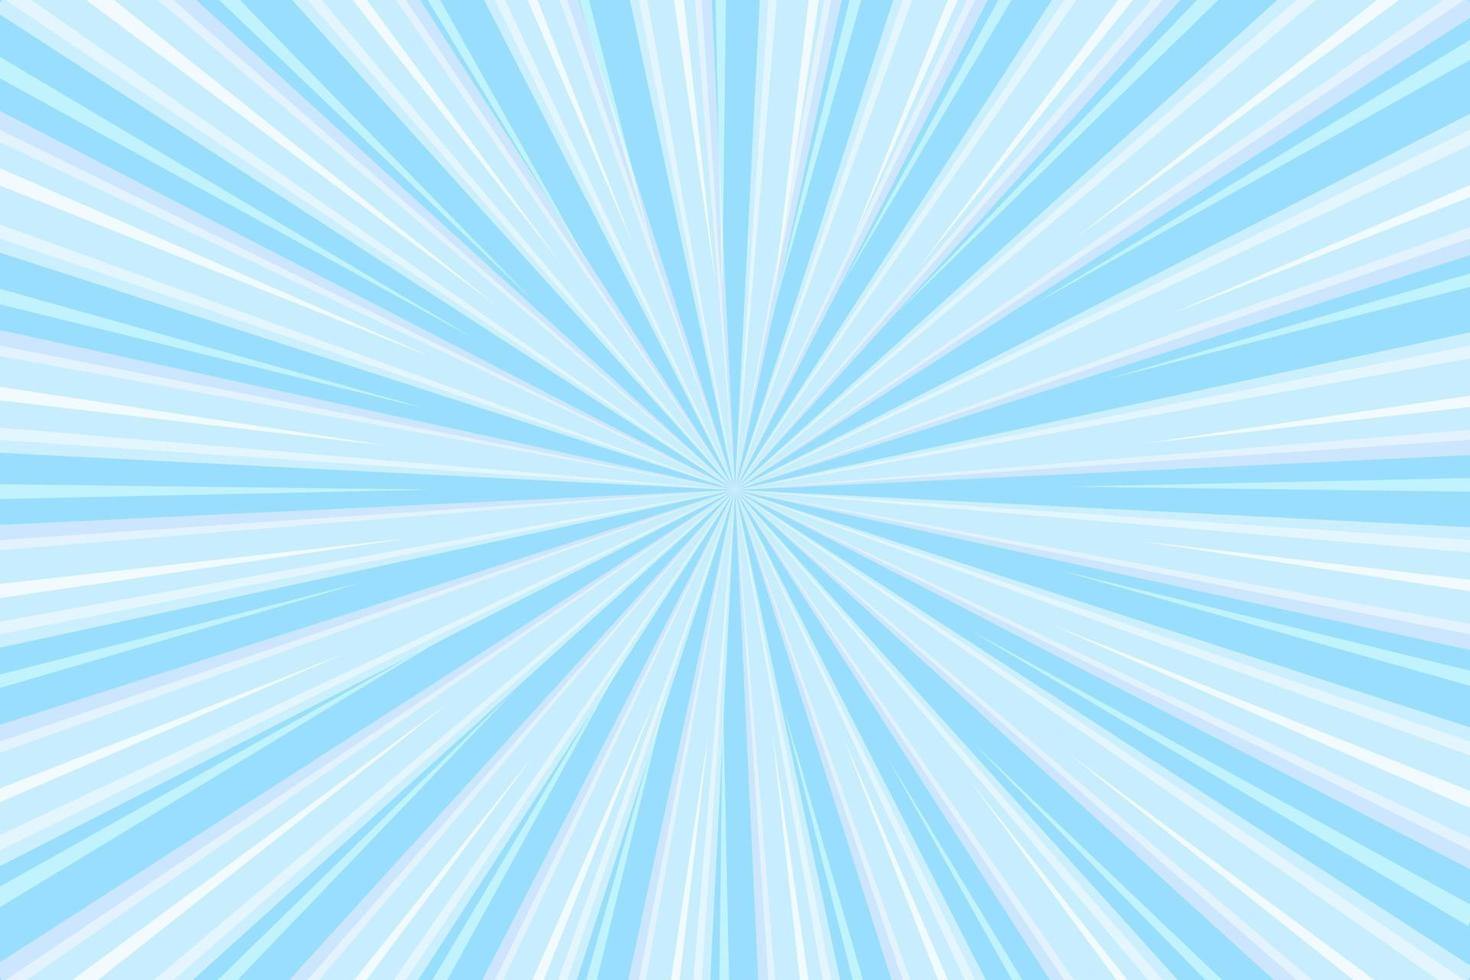 abstract blauw licht straal zonnestraal patroon achtergrond vector illustratie